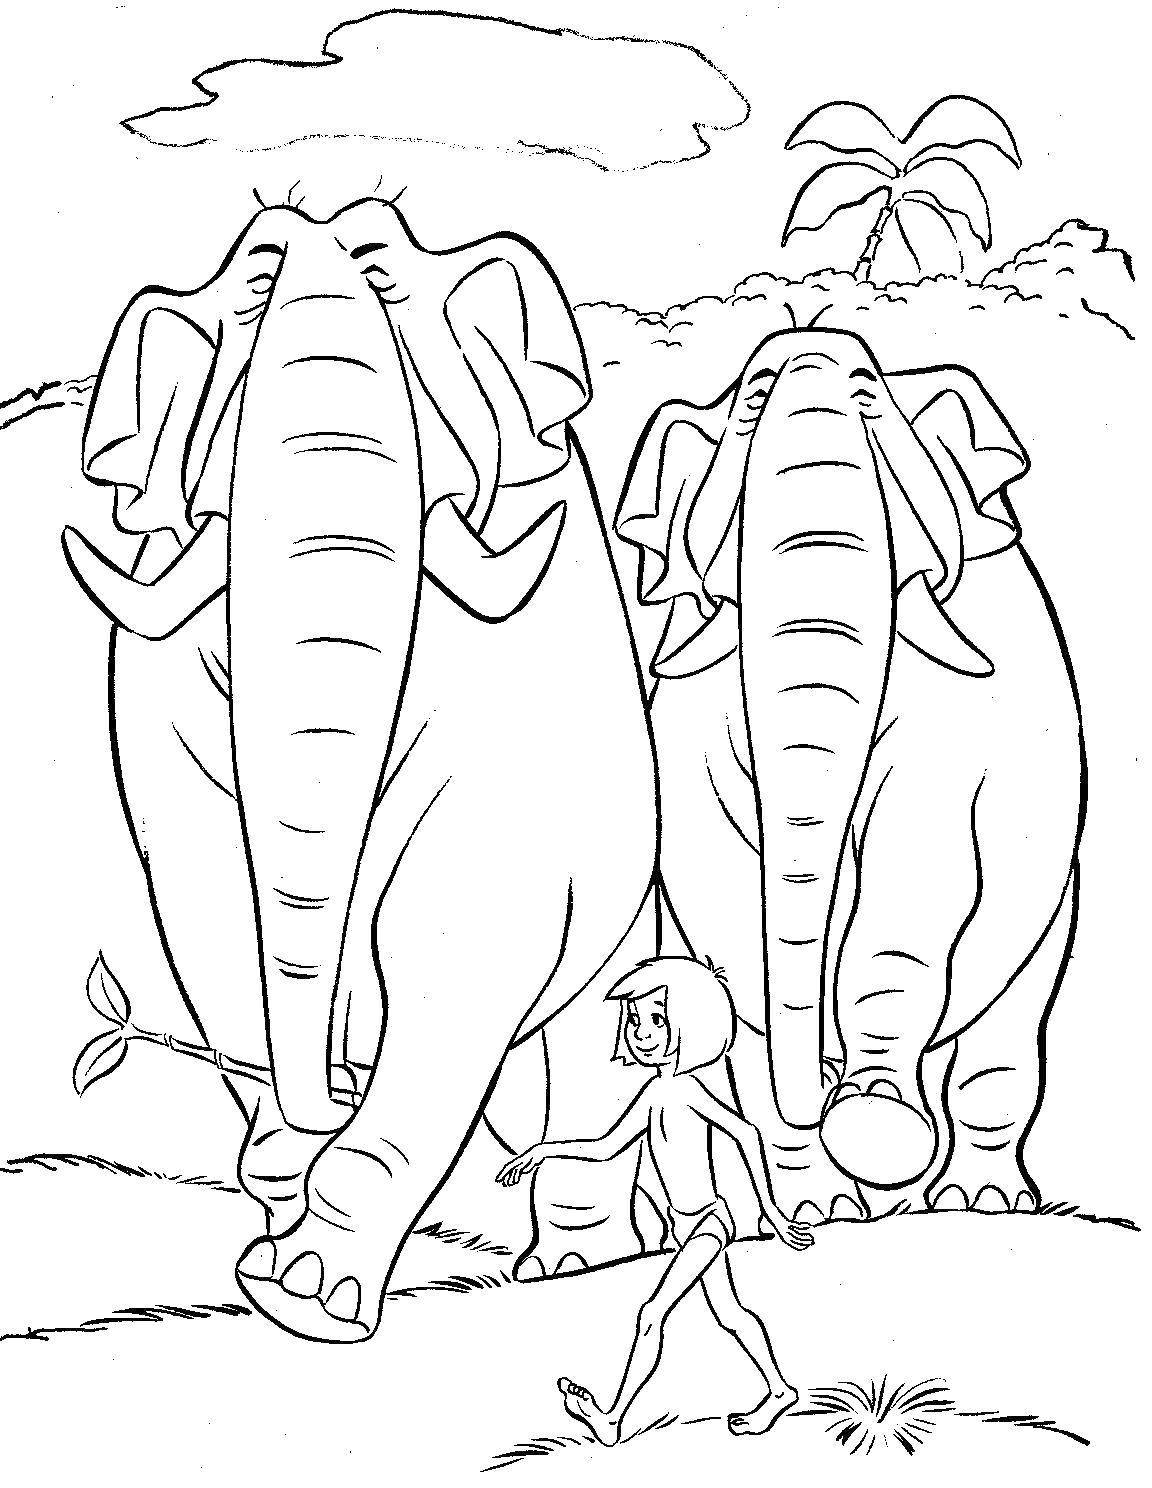 Coloring Mowgli and the elephants. Category Mowgli. Tags:  cartoon, Mowgli, elephants.